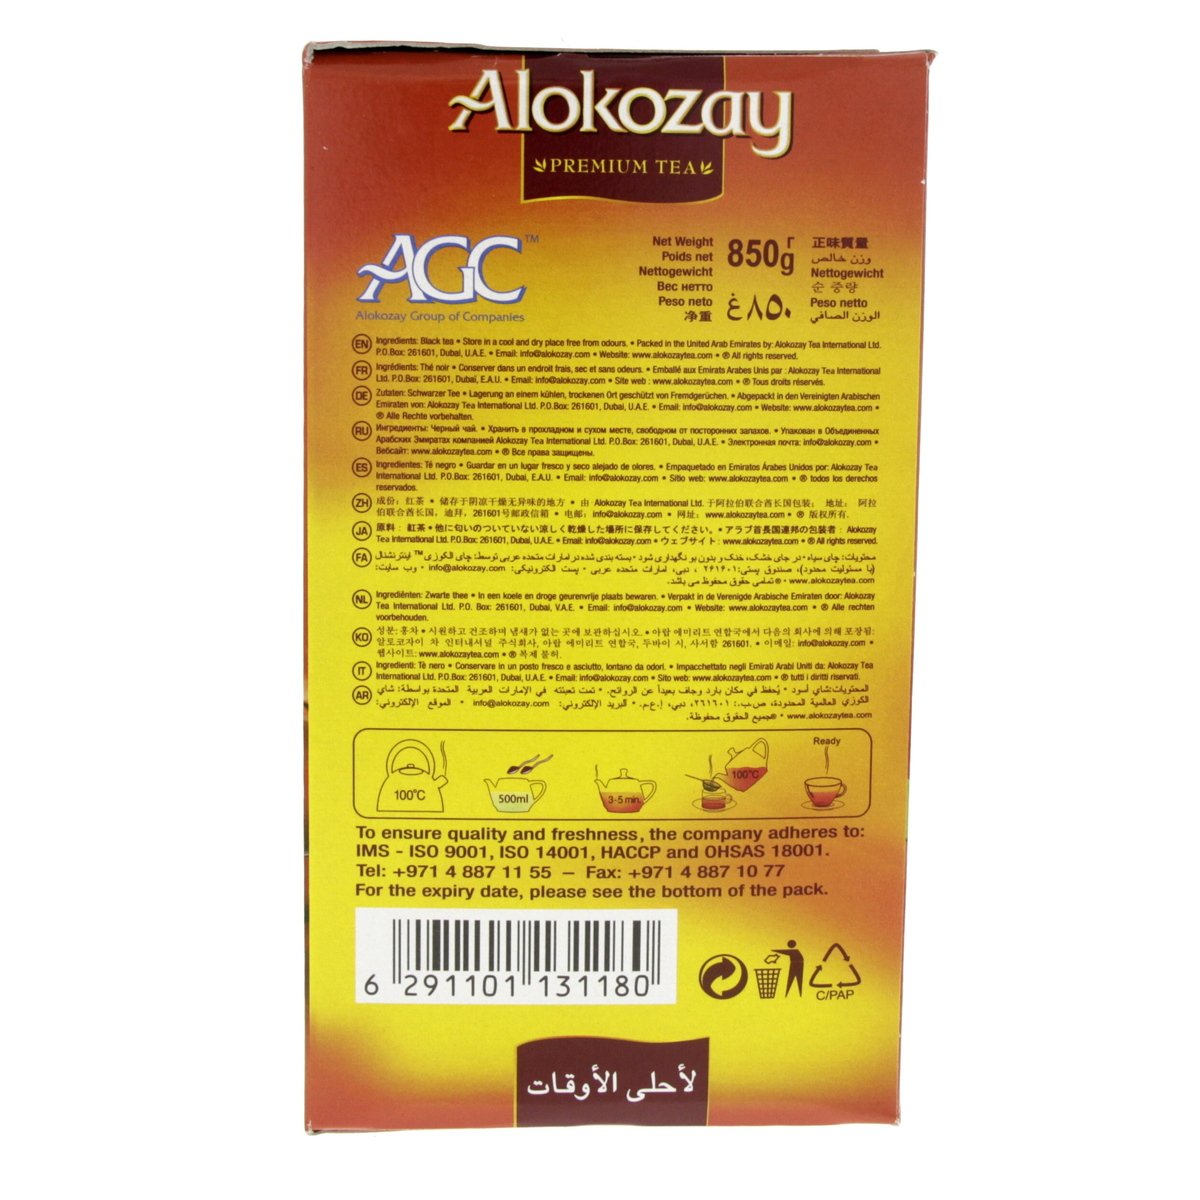 Alokozay CTC Loose Black Tea 850 g